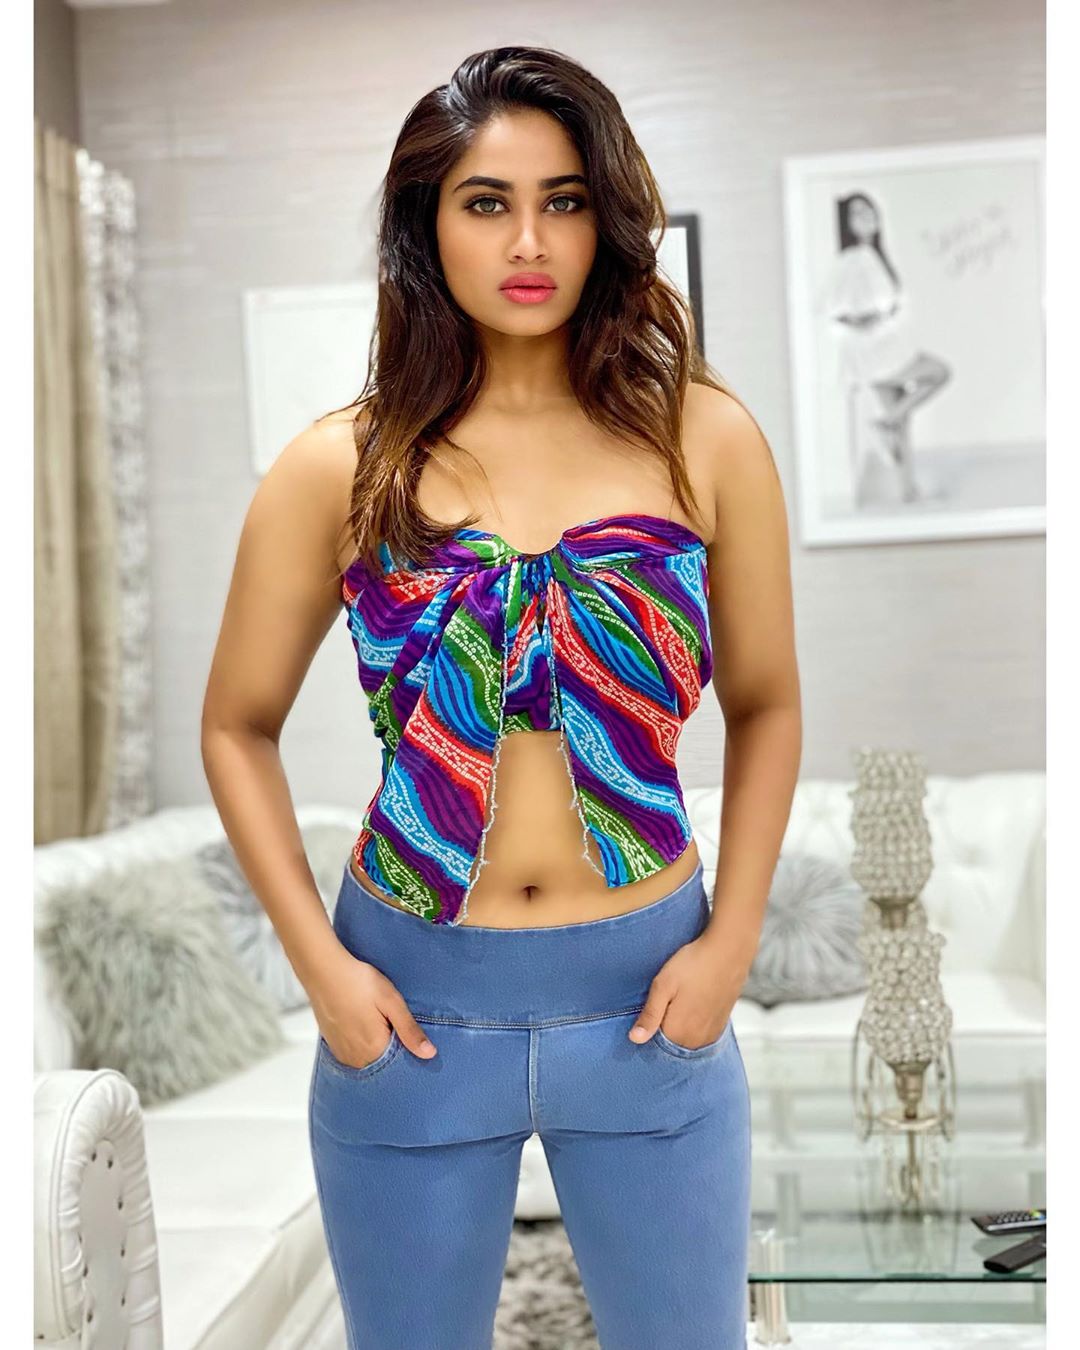 tamil tv serial actress hot photoshoot